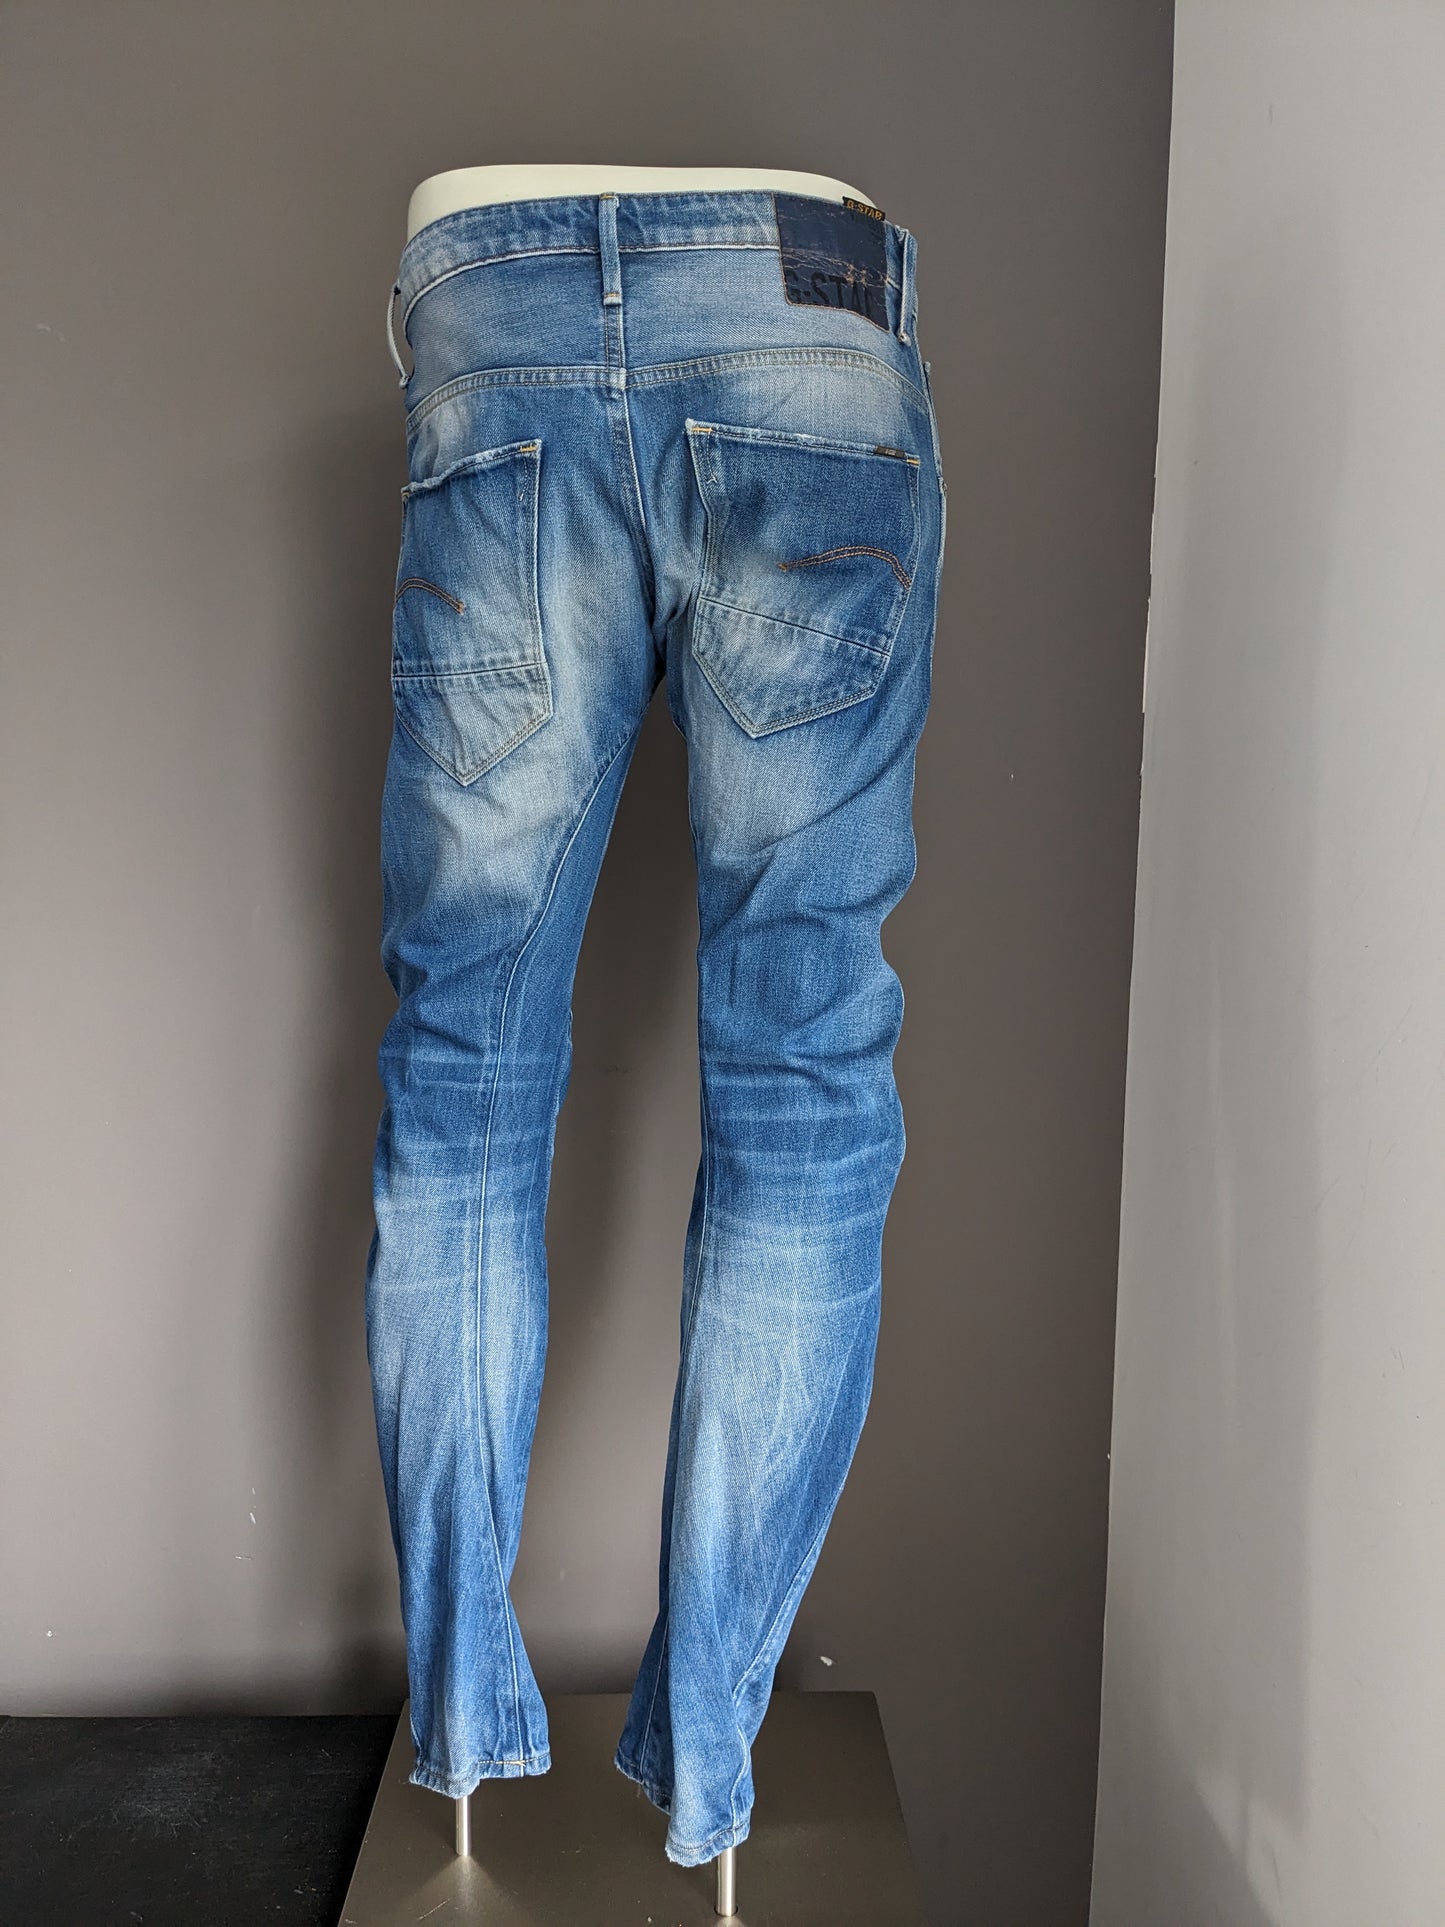 Gstar Raw Jeans. Light blue colored. Size W33 - L32.